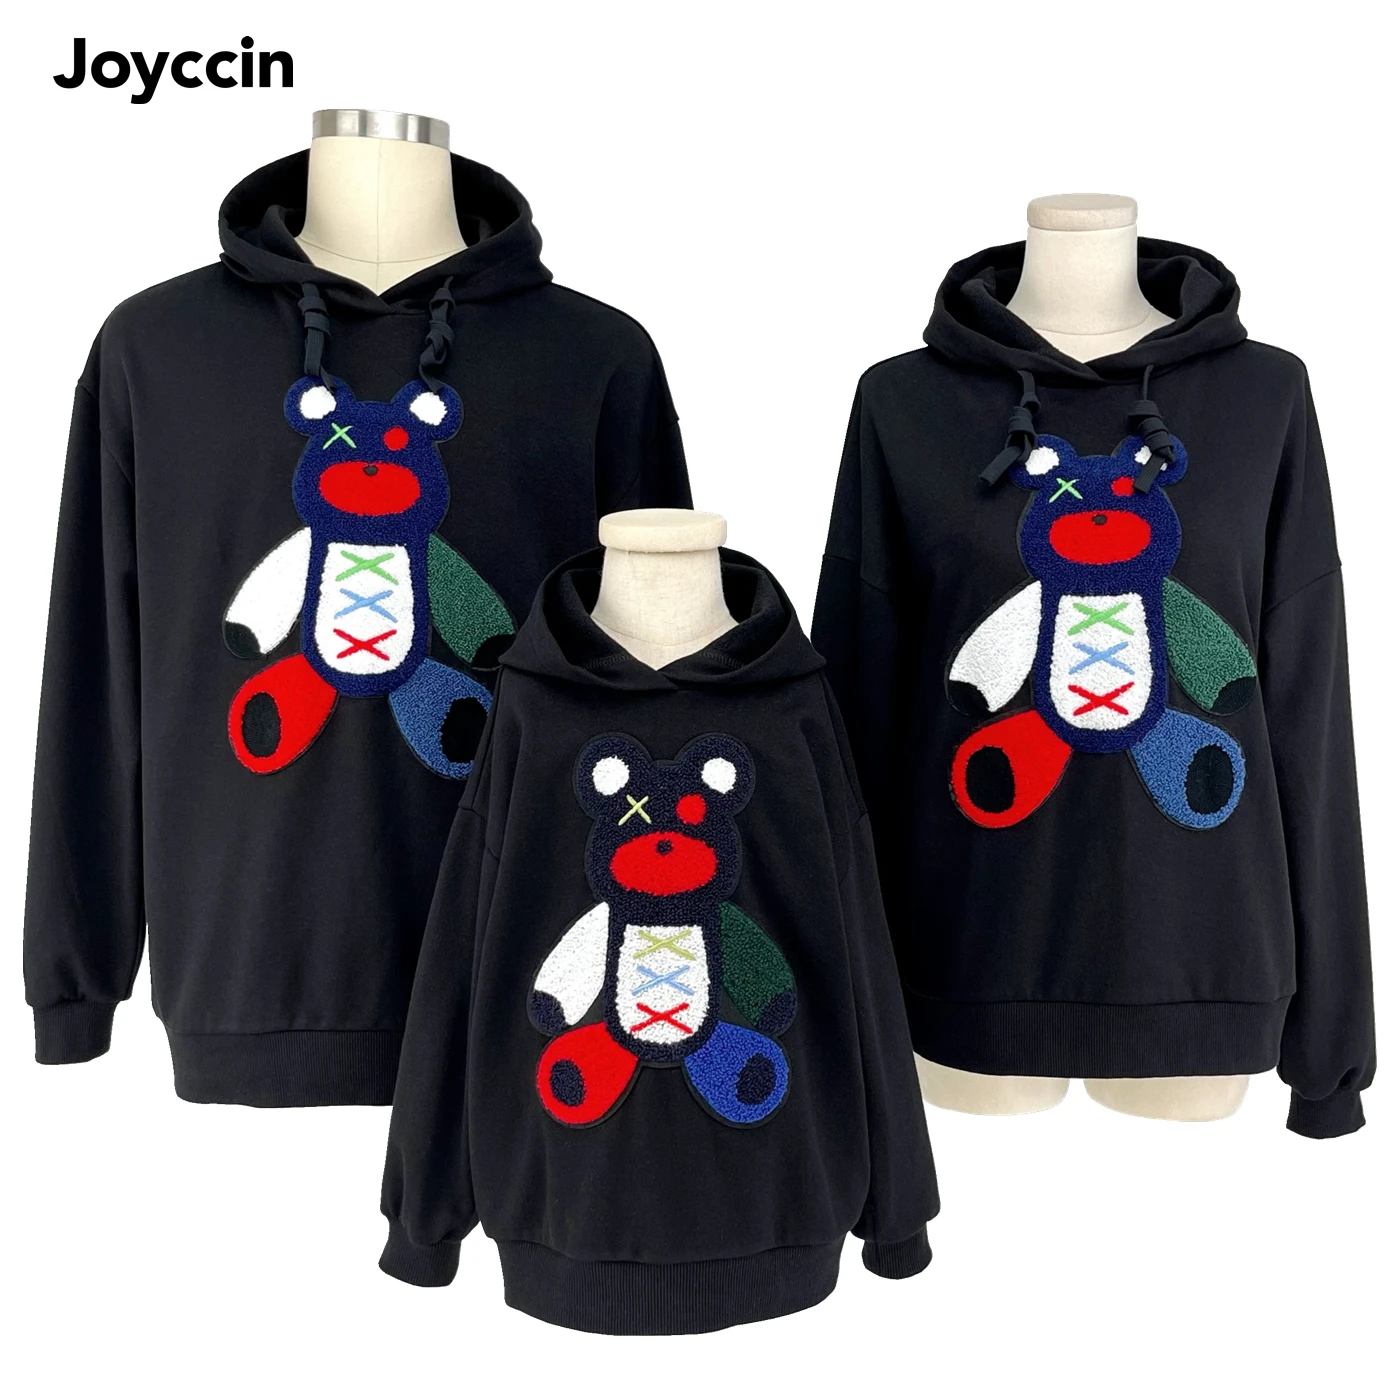 

Joyccin Bear Embroidery Hoodies & Sweatshirts Family Matching Outfits Autumn Fleeced Cartoon Drop Shoulder Strange Things Hoody